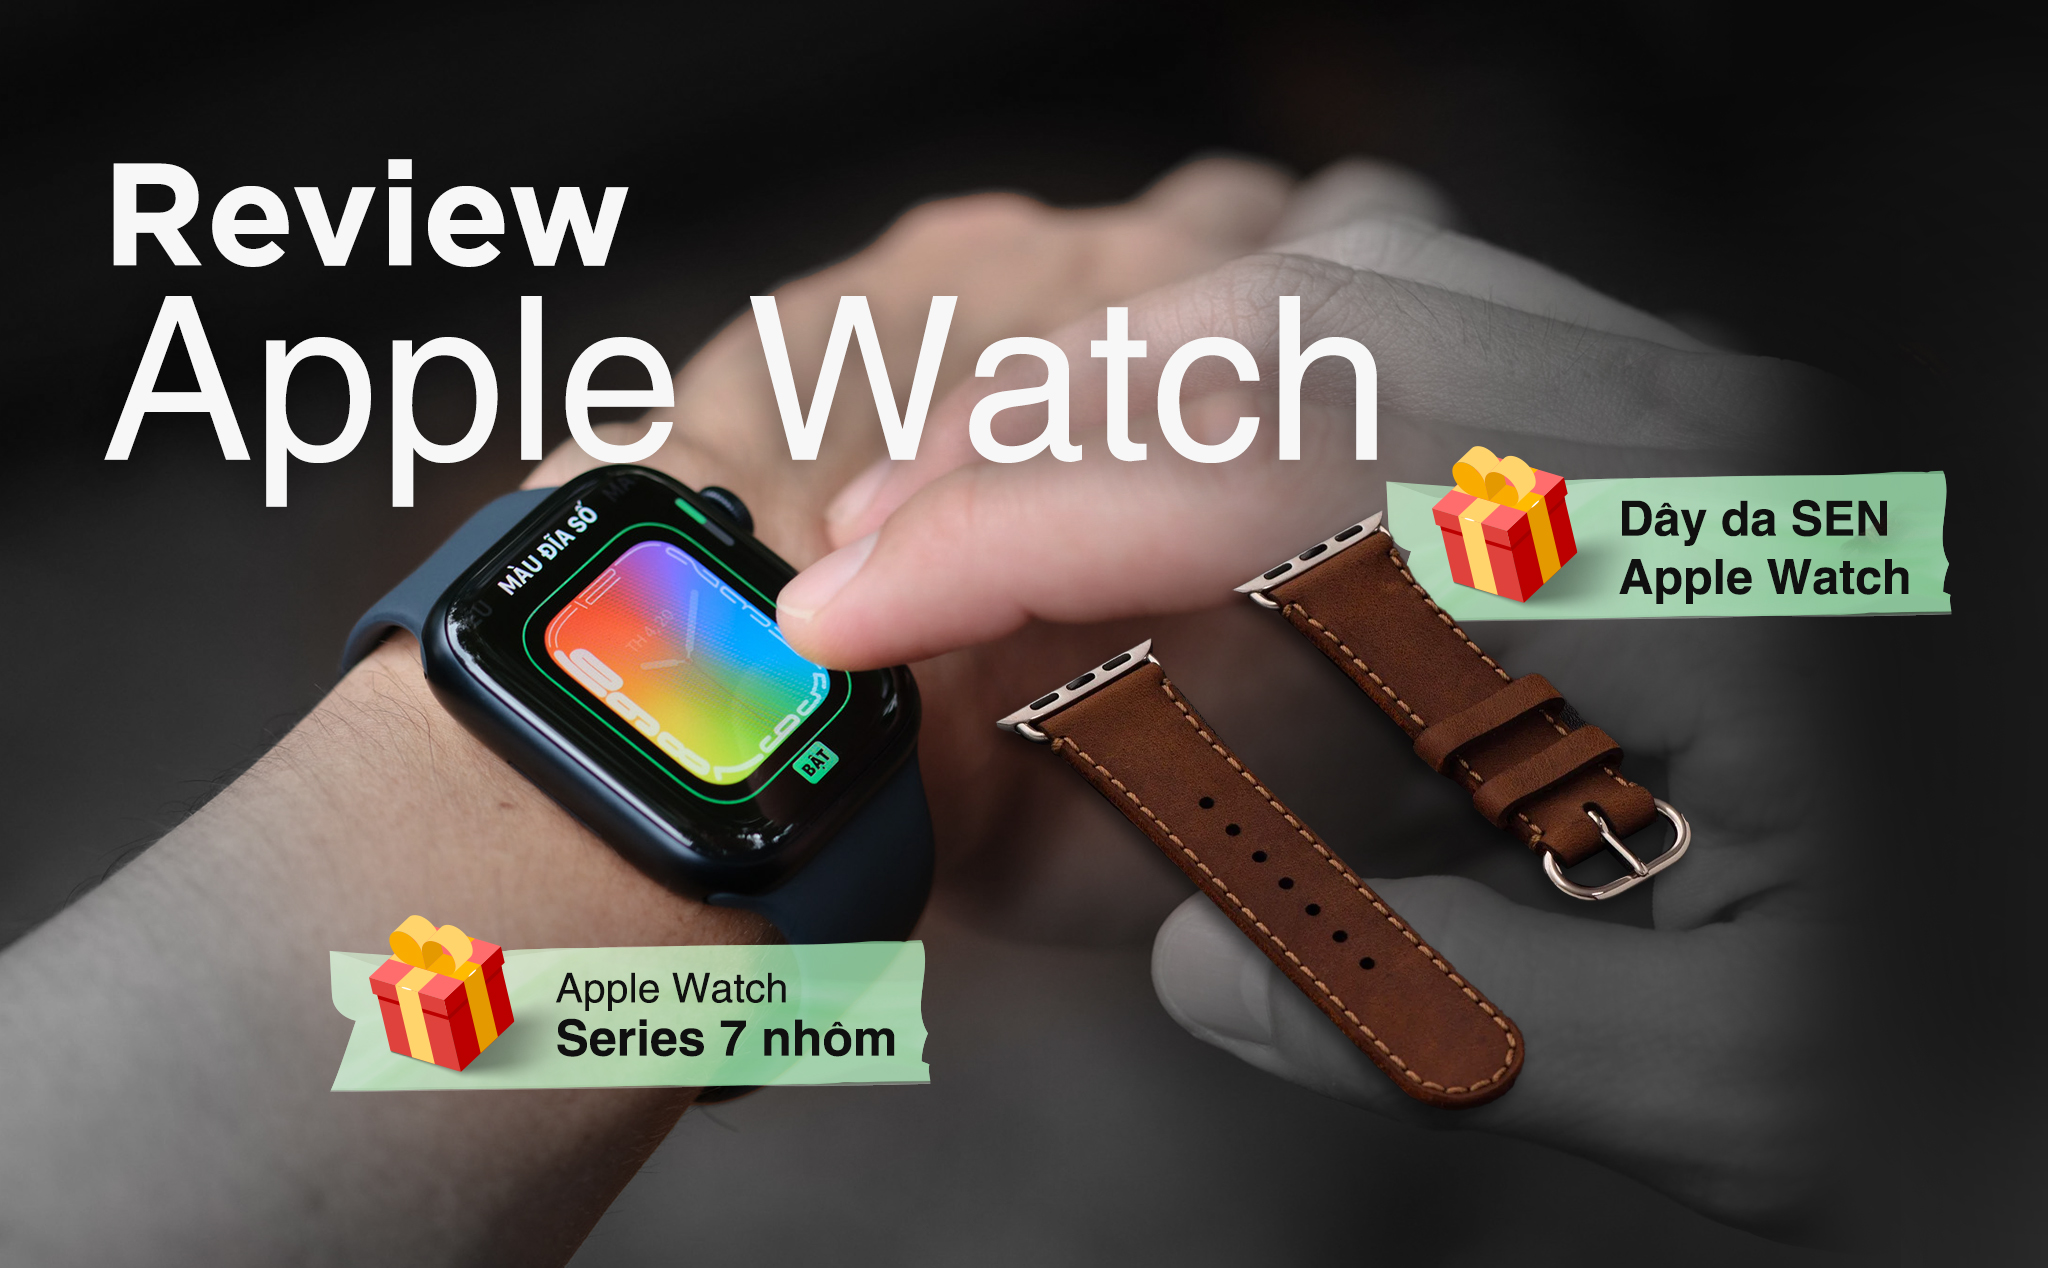 Mời anh em review Apple Watch trúng Apple Watch 7 và dây da SEN từ Khacten.com